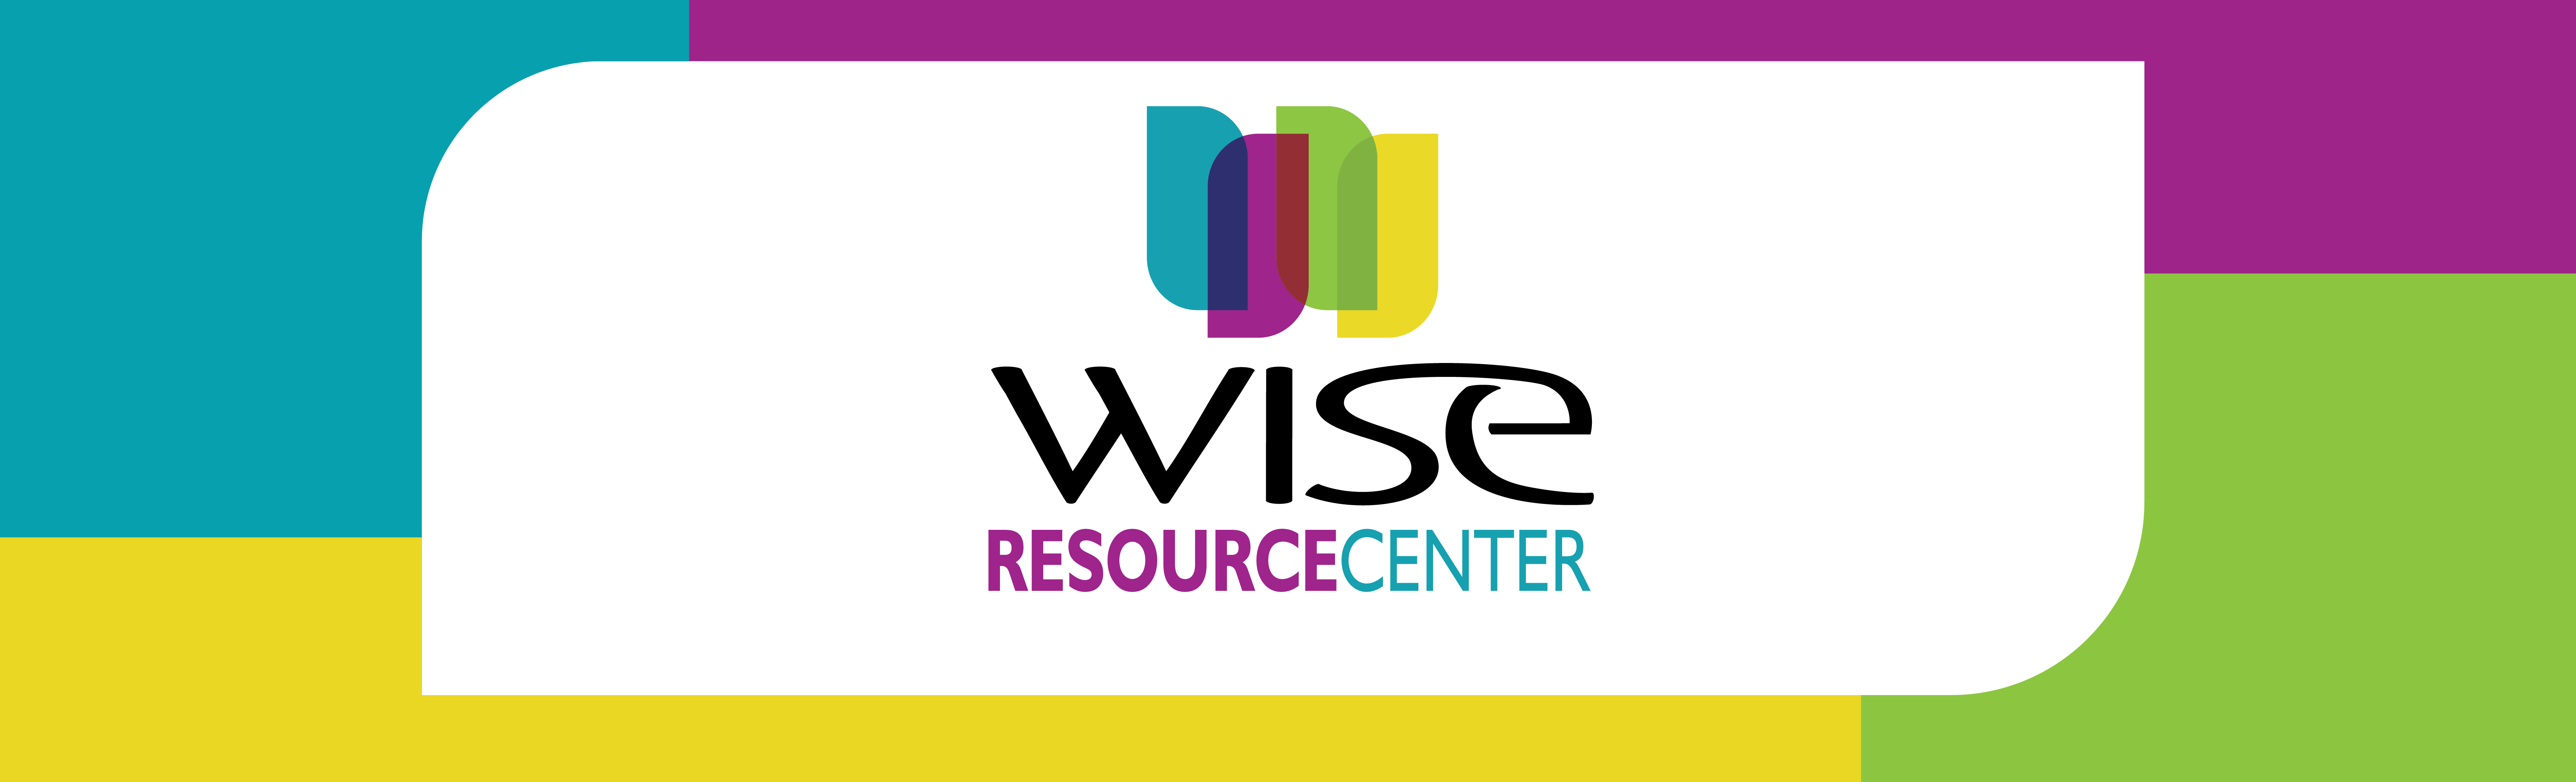 2021 WISE Web Headers RESOURCE CENTER